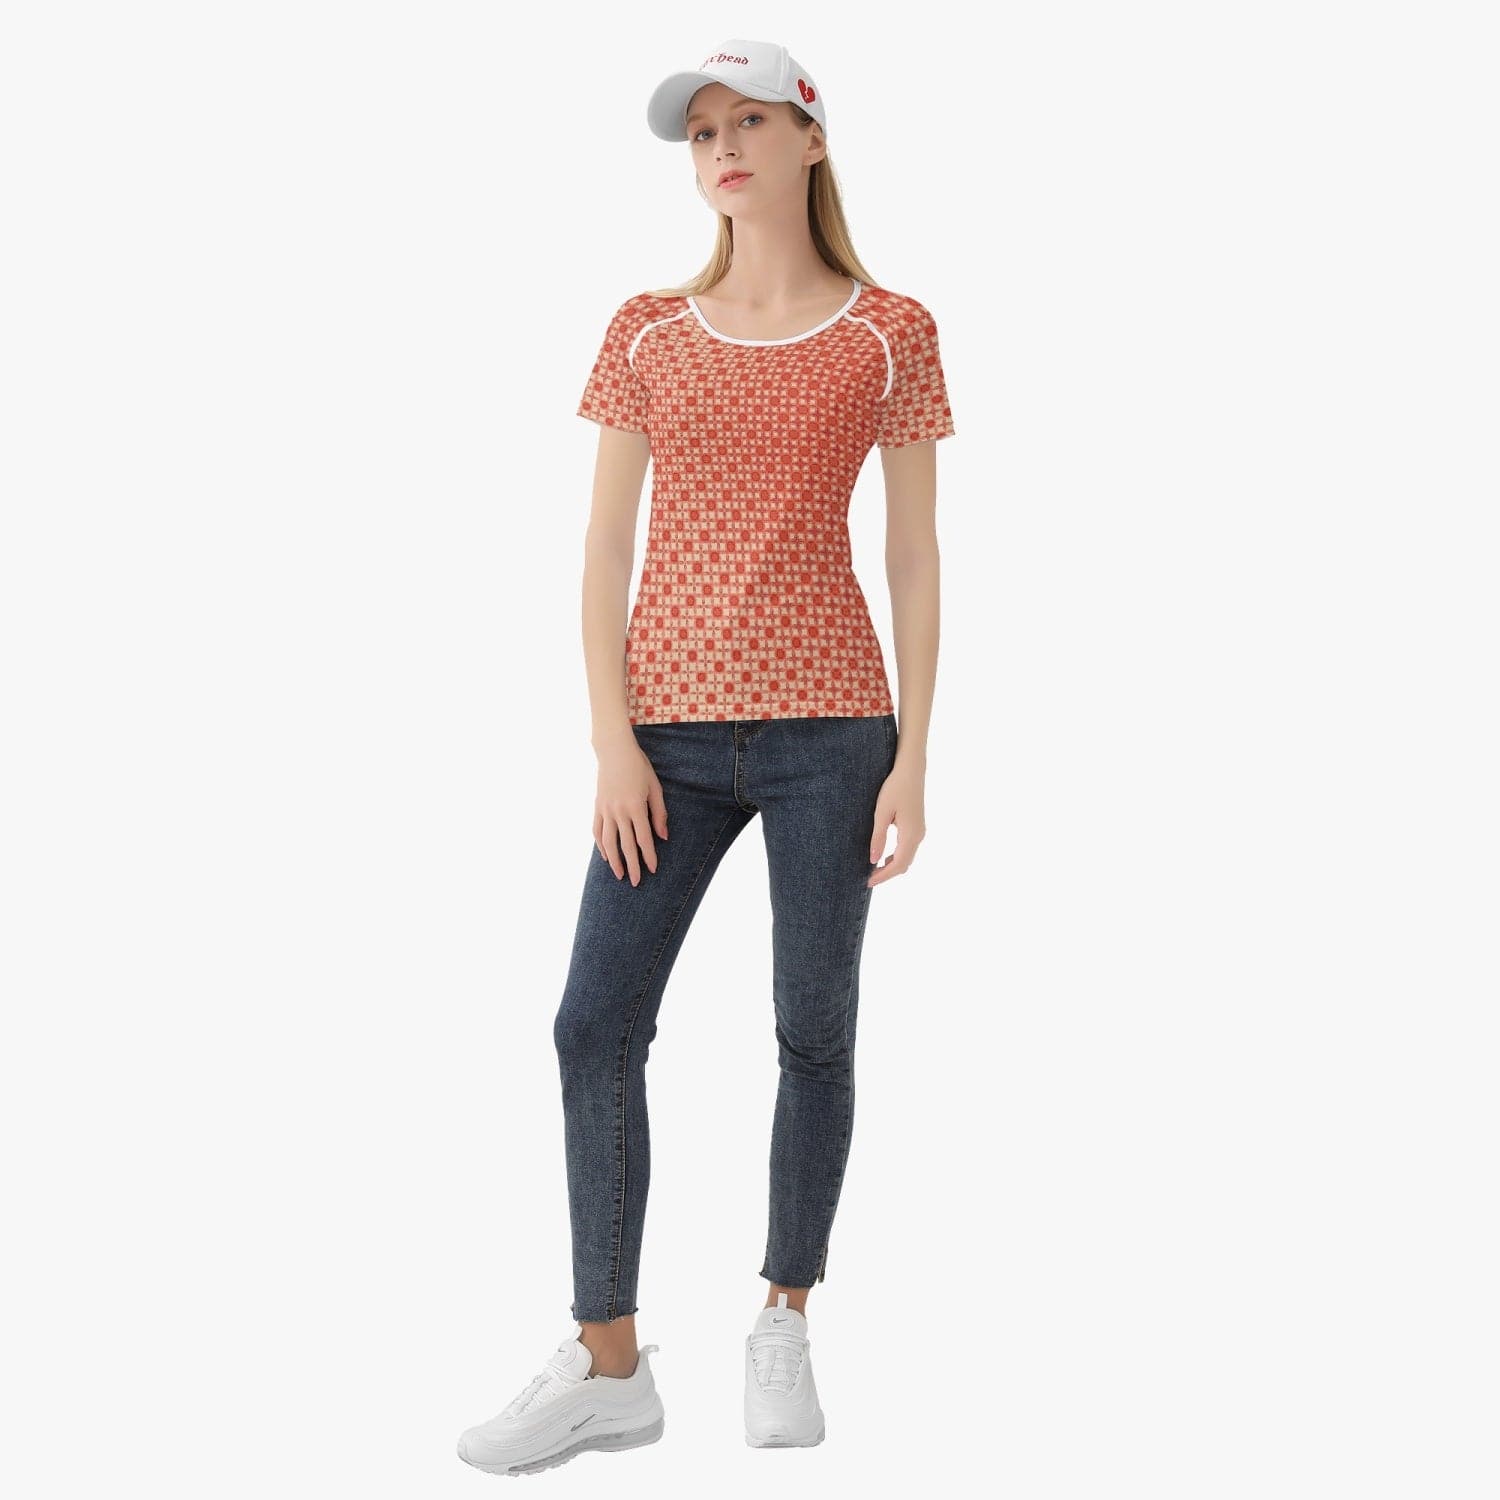 Soft Red Buttercup, Handmade Hot Women sports/yoga T-shirt , by Sensus Studio Design